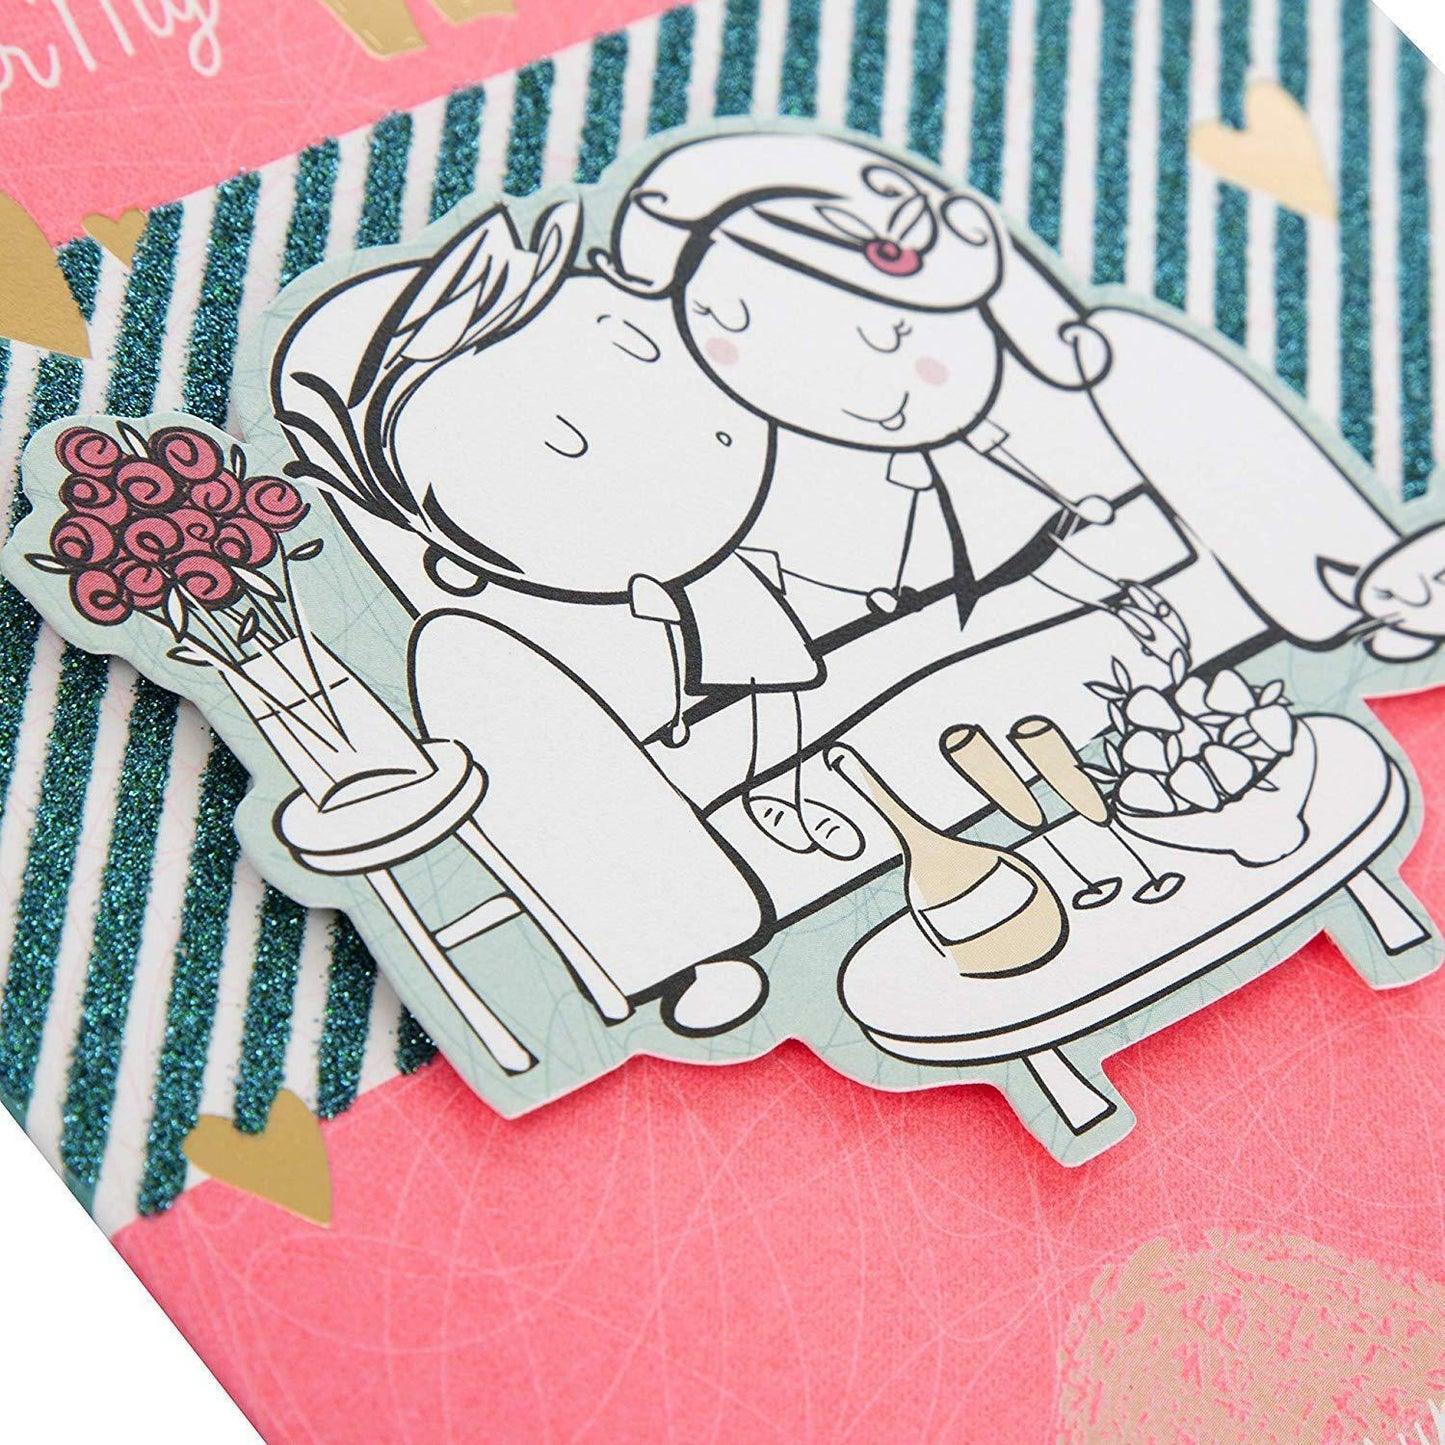 Hallmark Wife Valentine's Day Card 'Amazing Together'